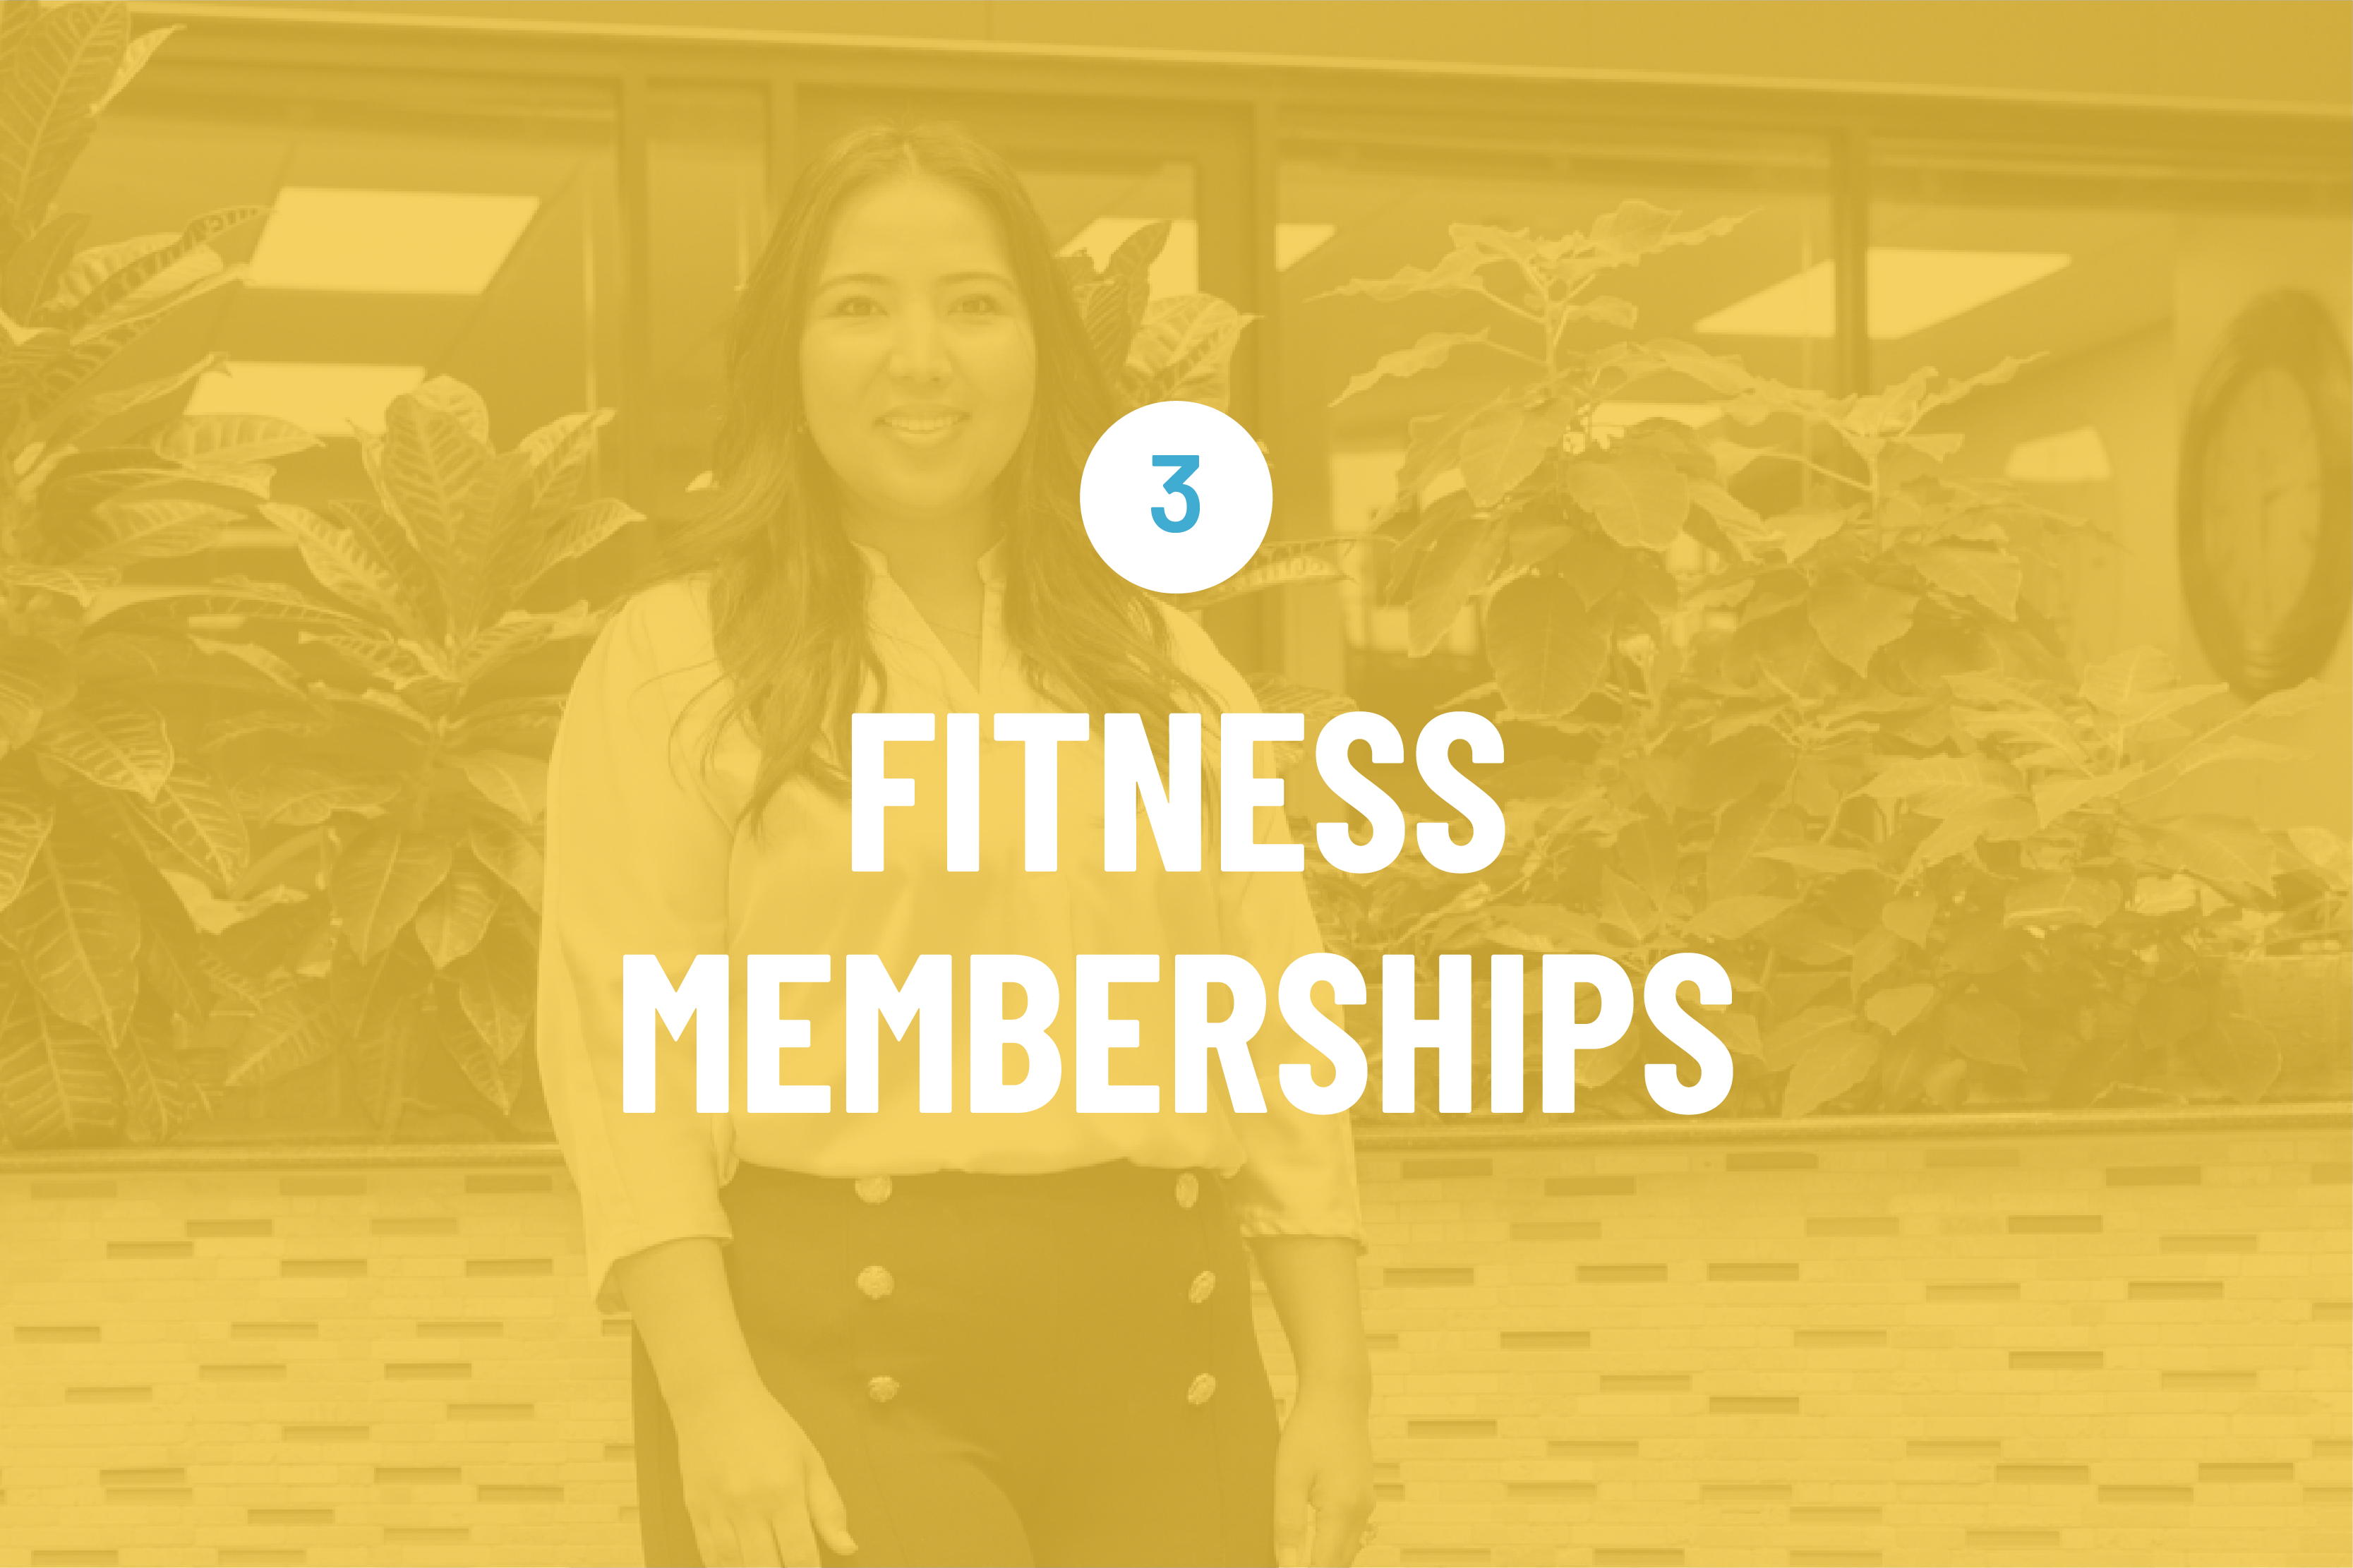 3 - Fitness Memberships